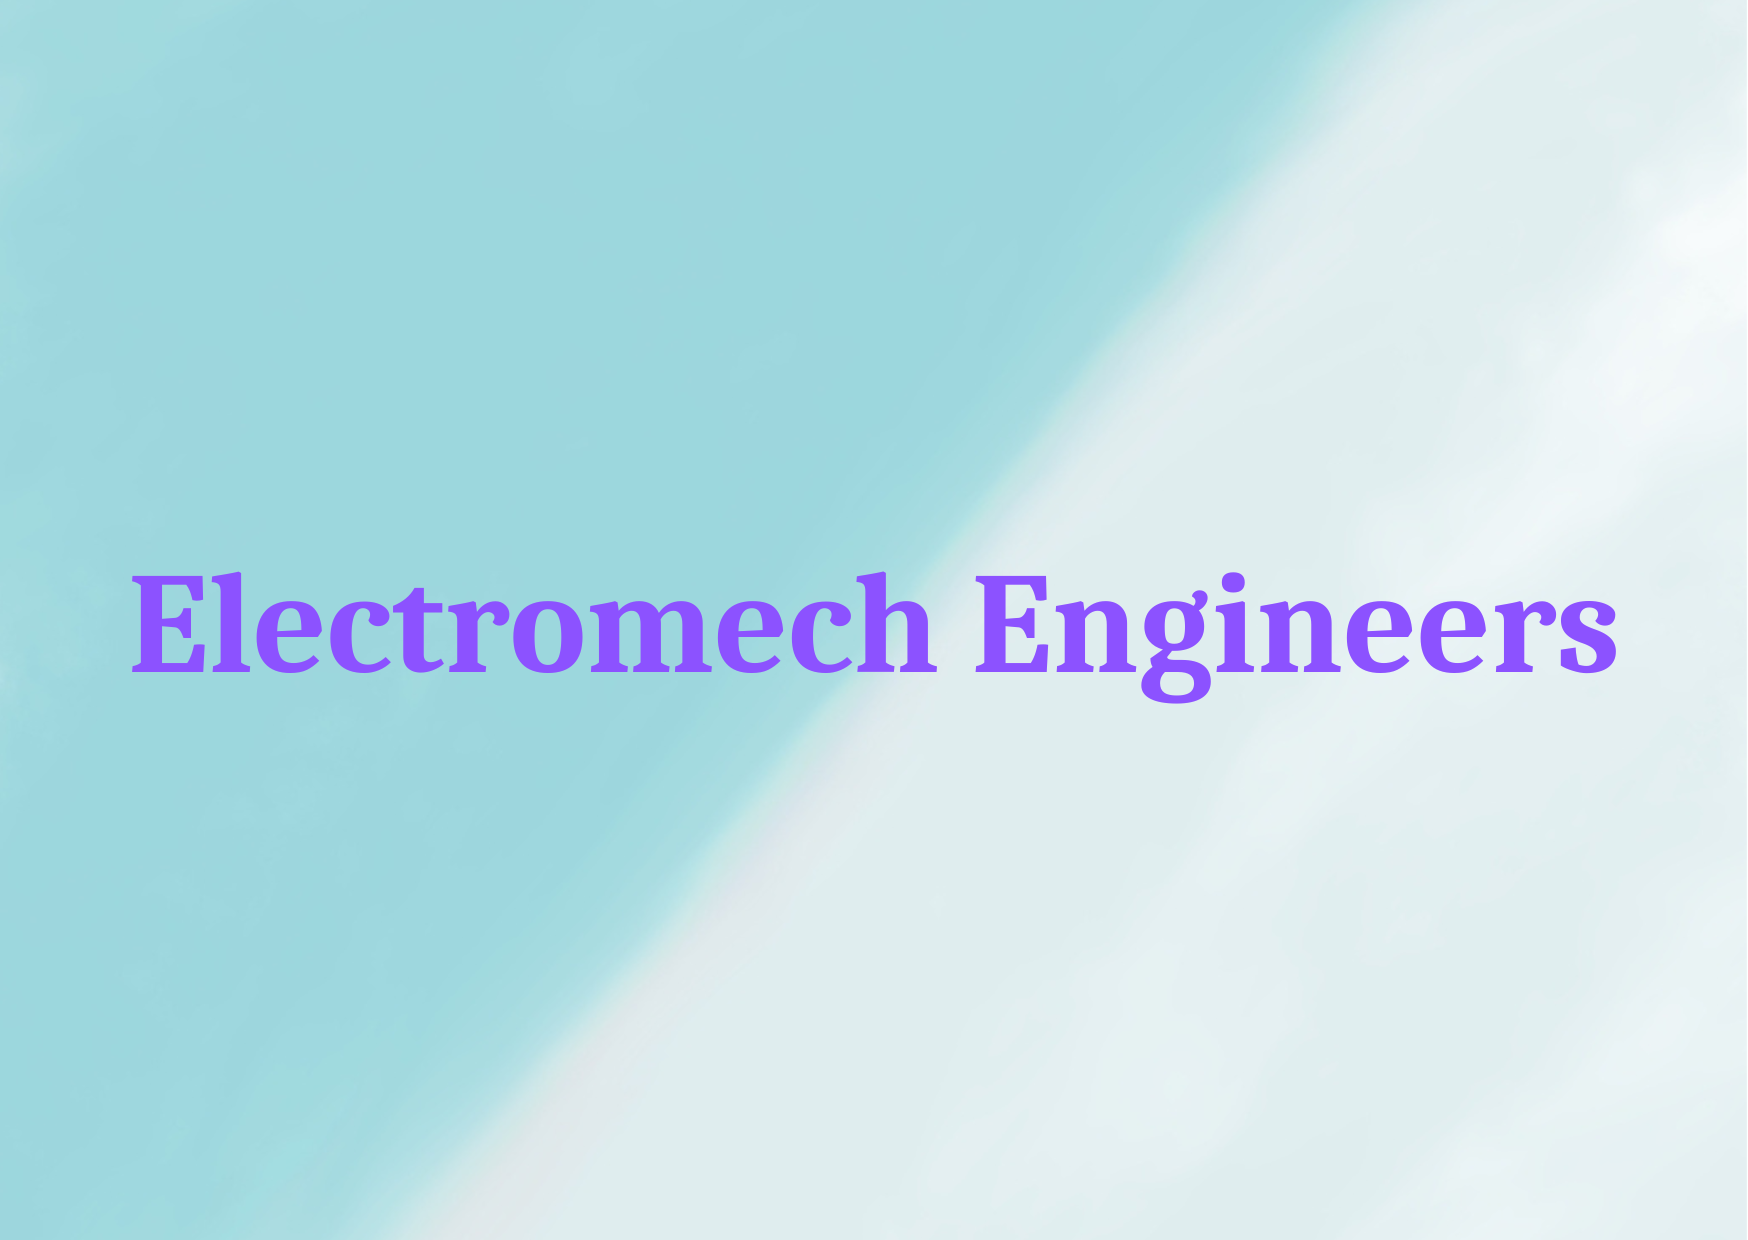  Electromech Engineers,   